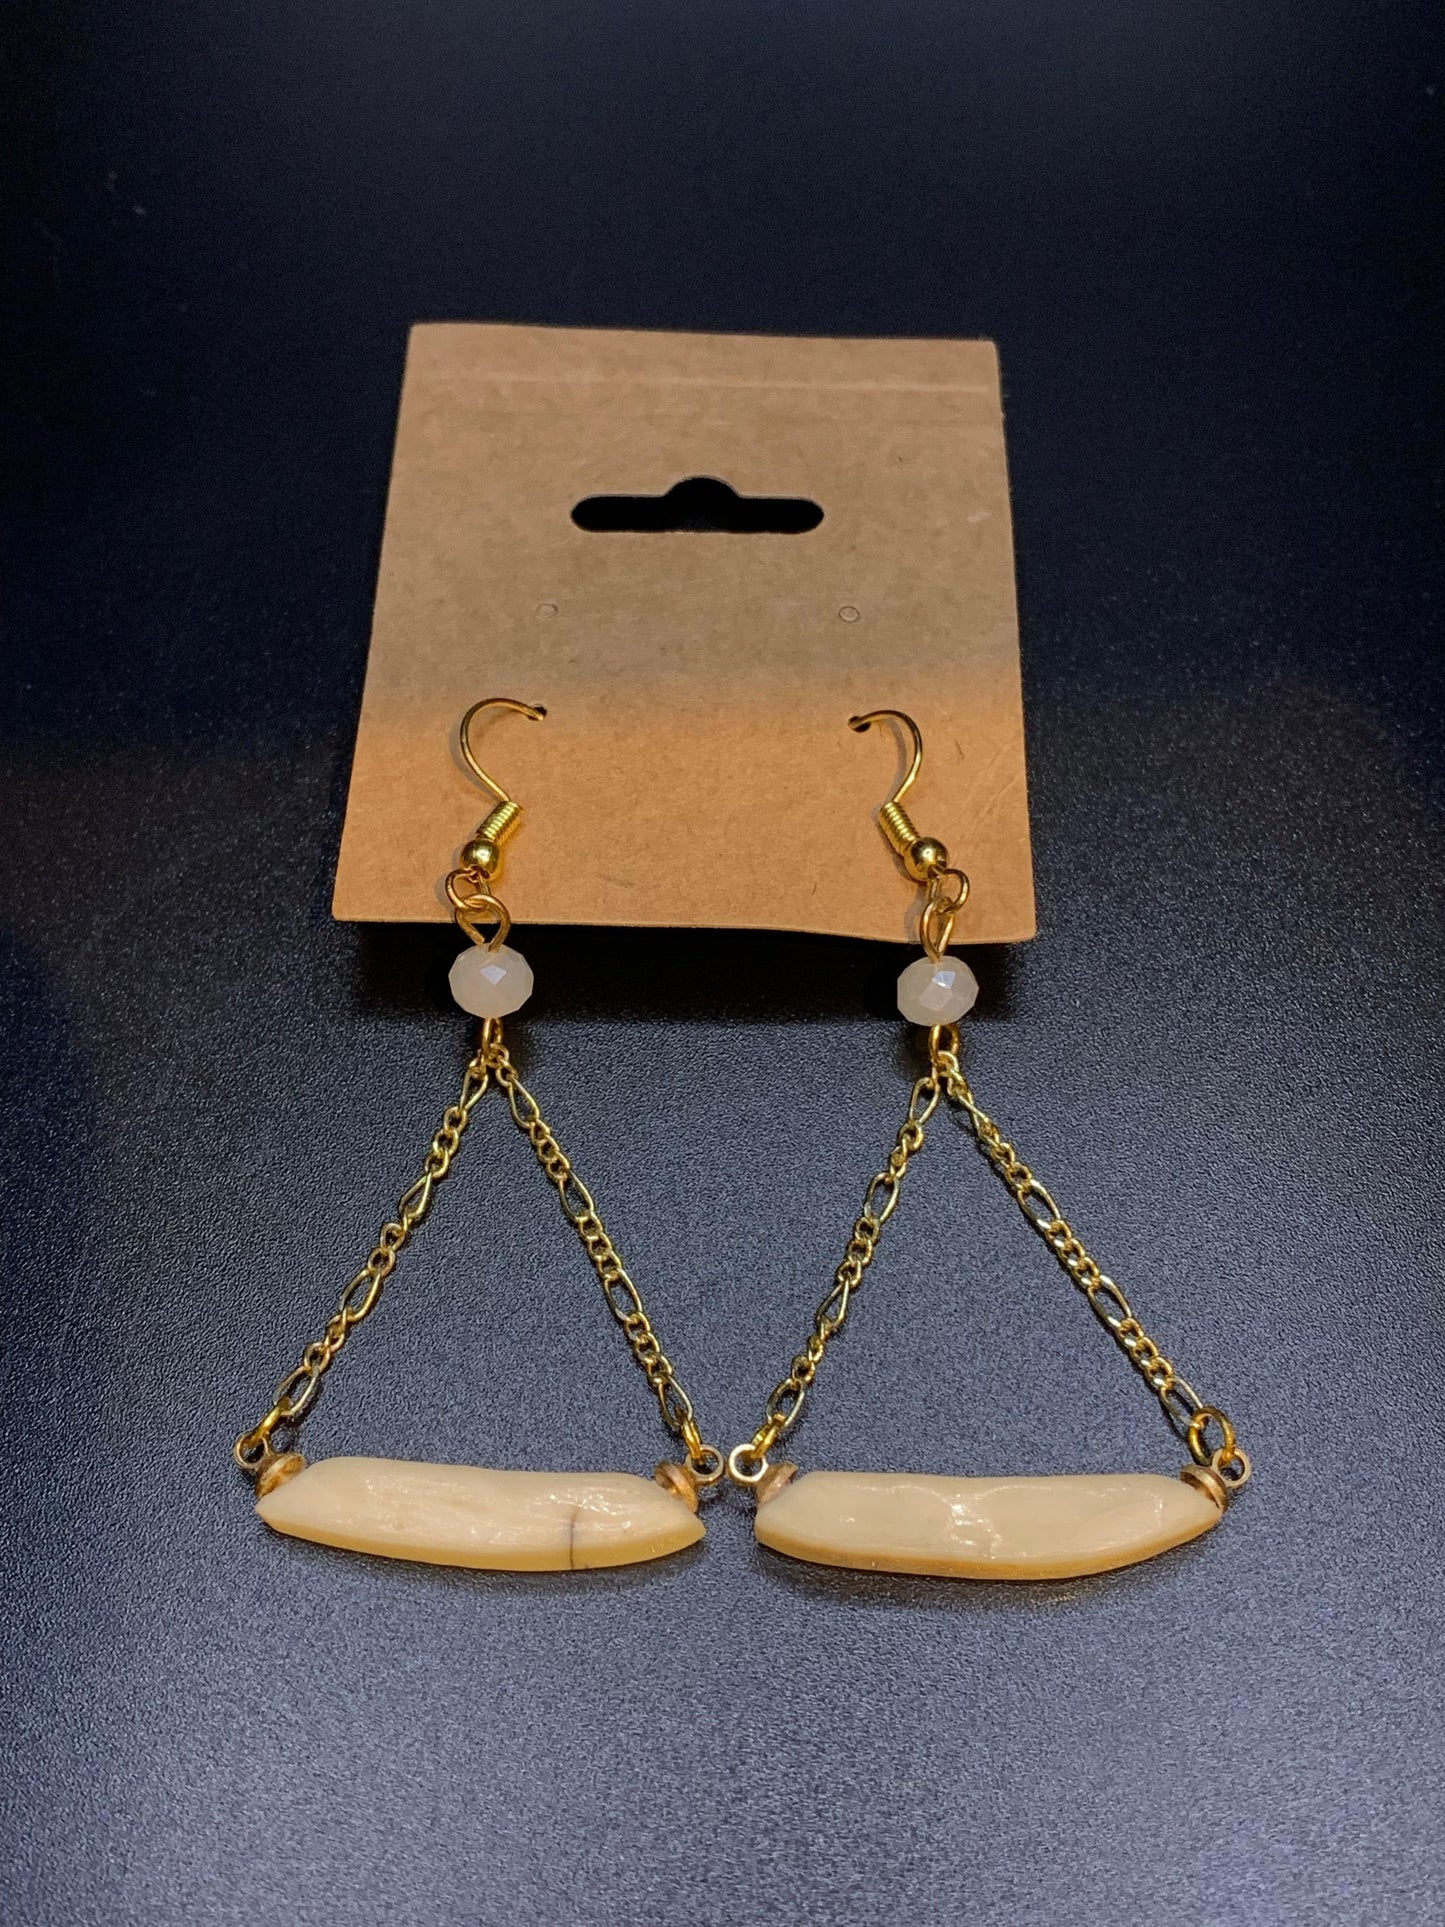 Aeshia Upton - Horizontal Ivory Bar Earrings w/ Gold Chains